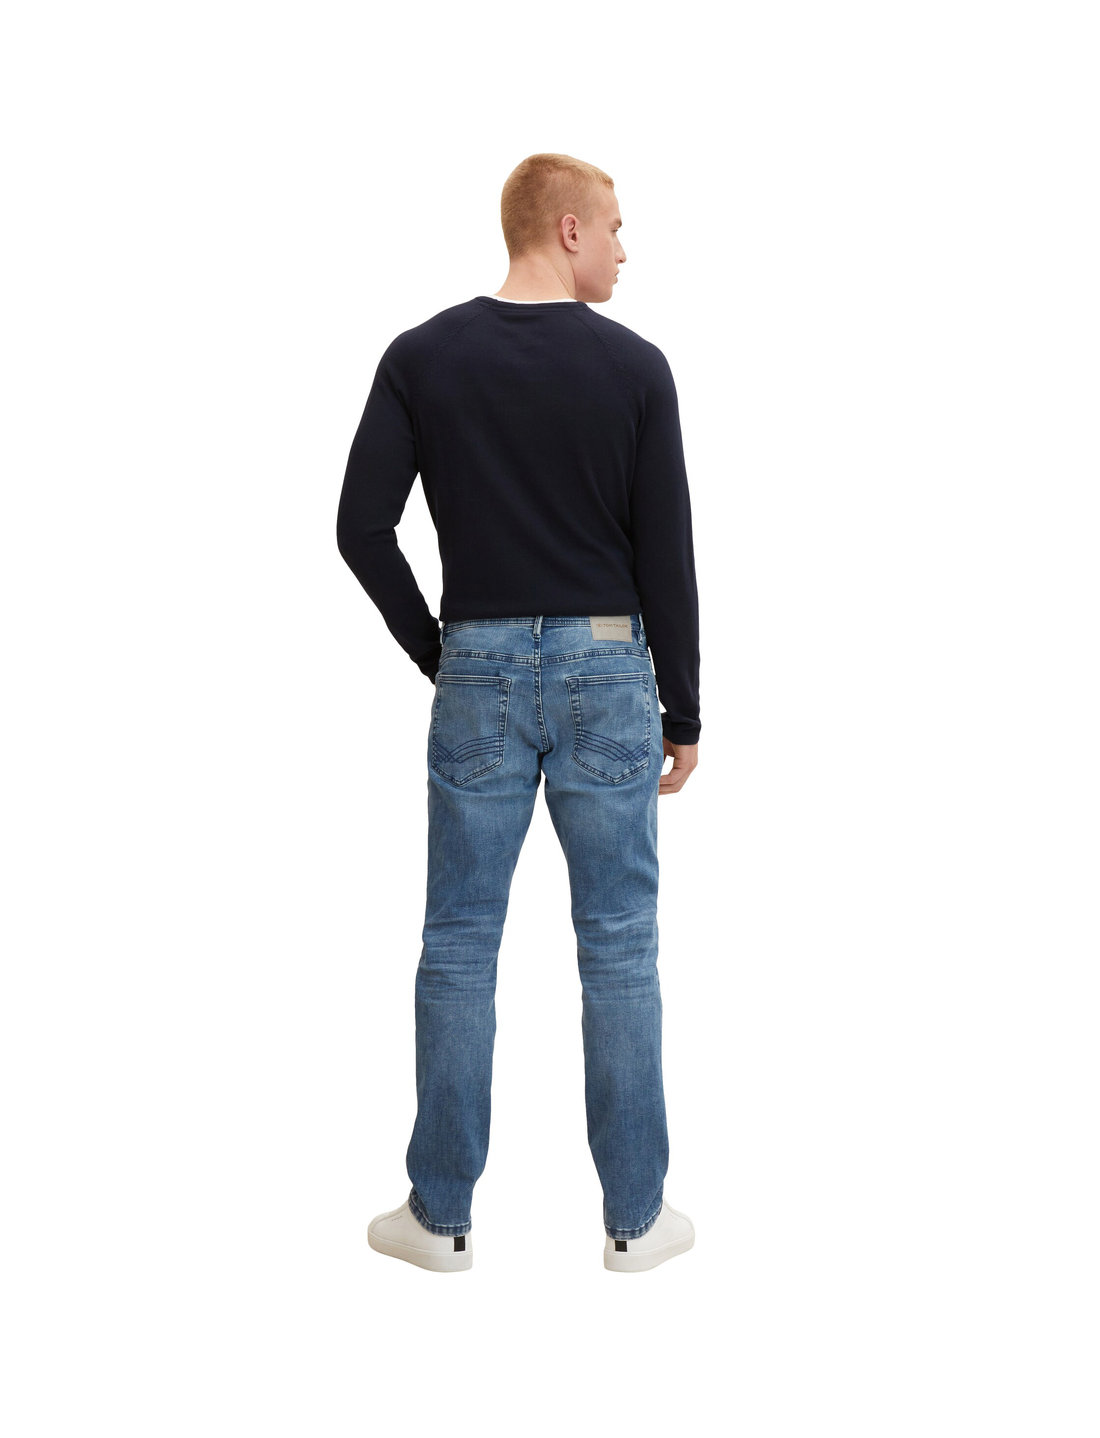 Tom Tailor Tom Tailor Josh Freef!t® – jeans – shop at Booztlet